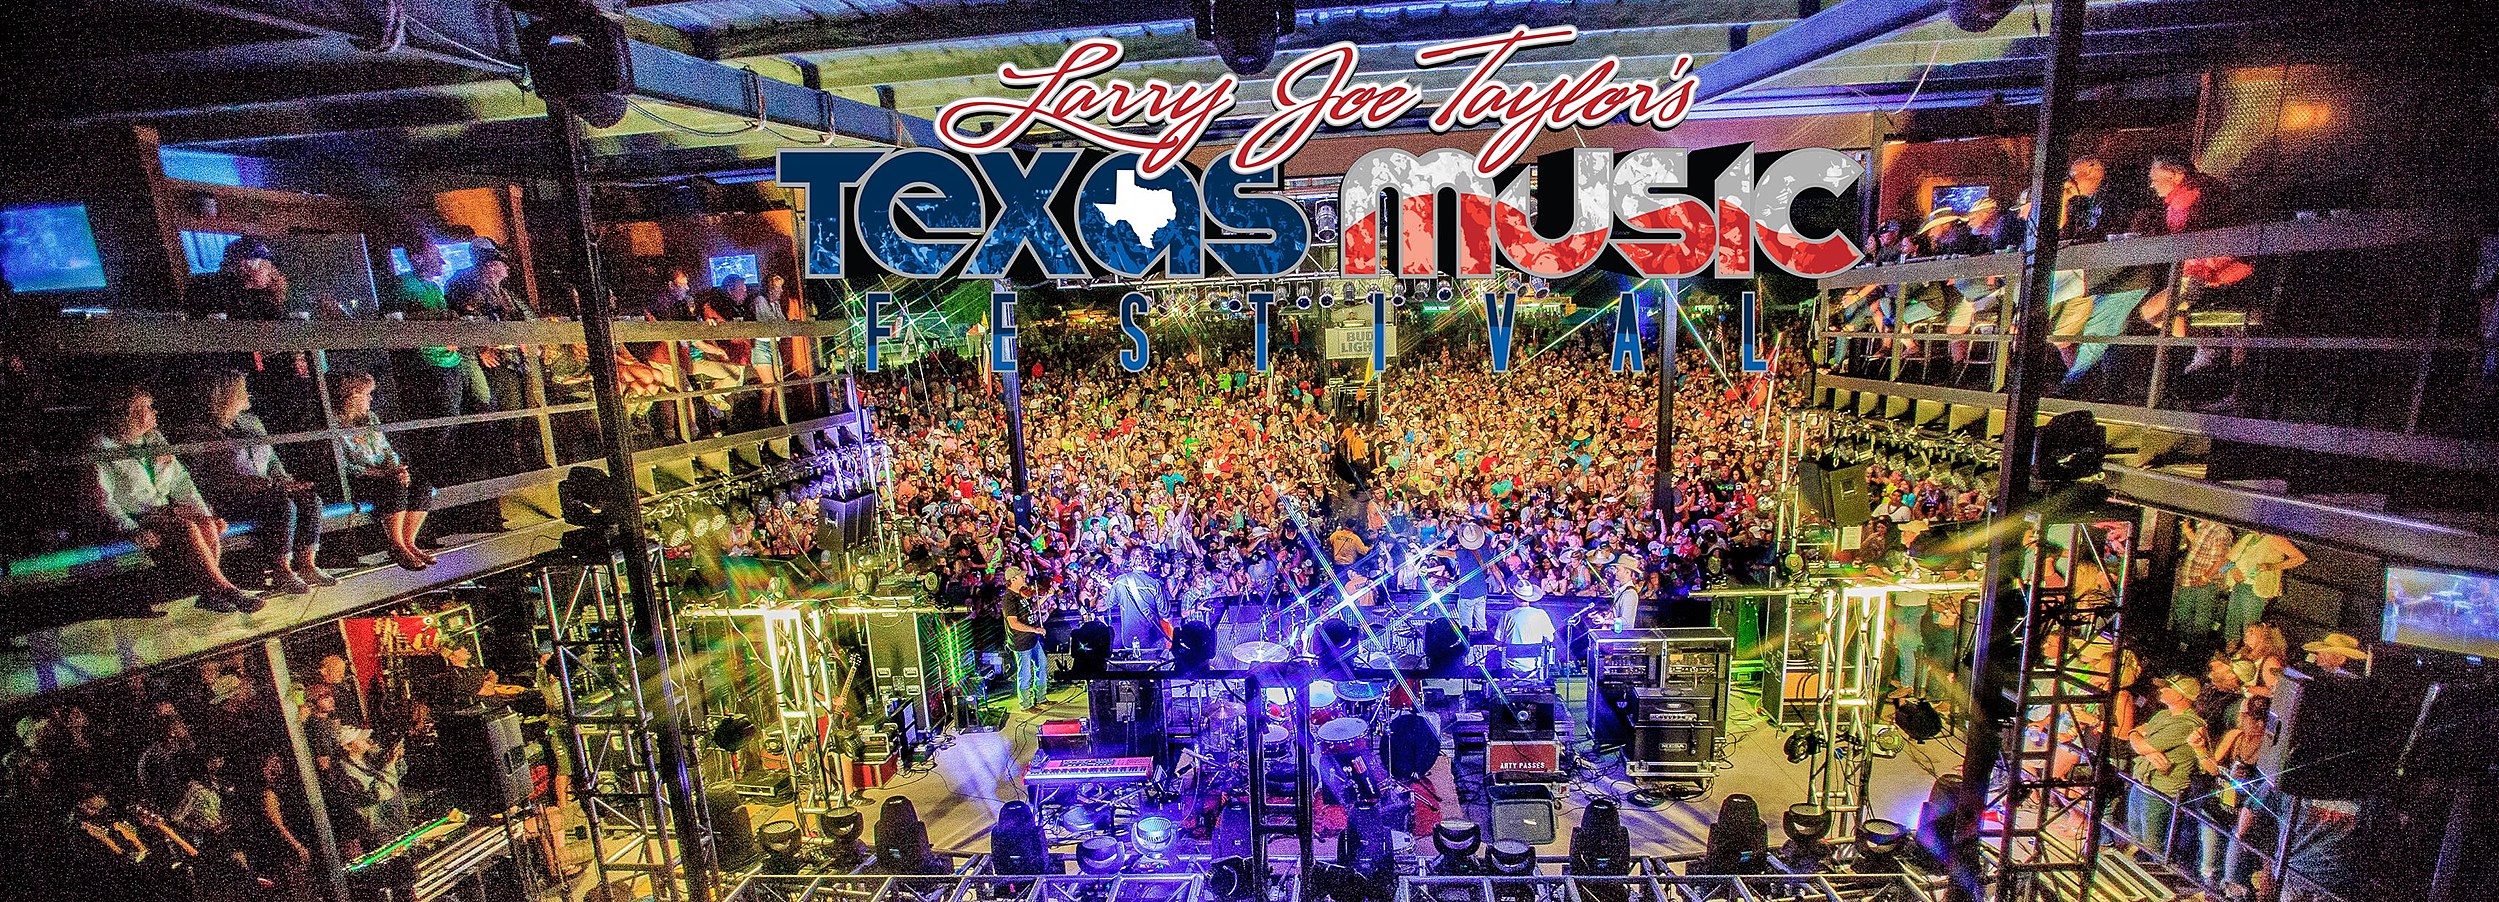 Larry Joe Taylor’s Texas Music Festival